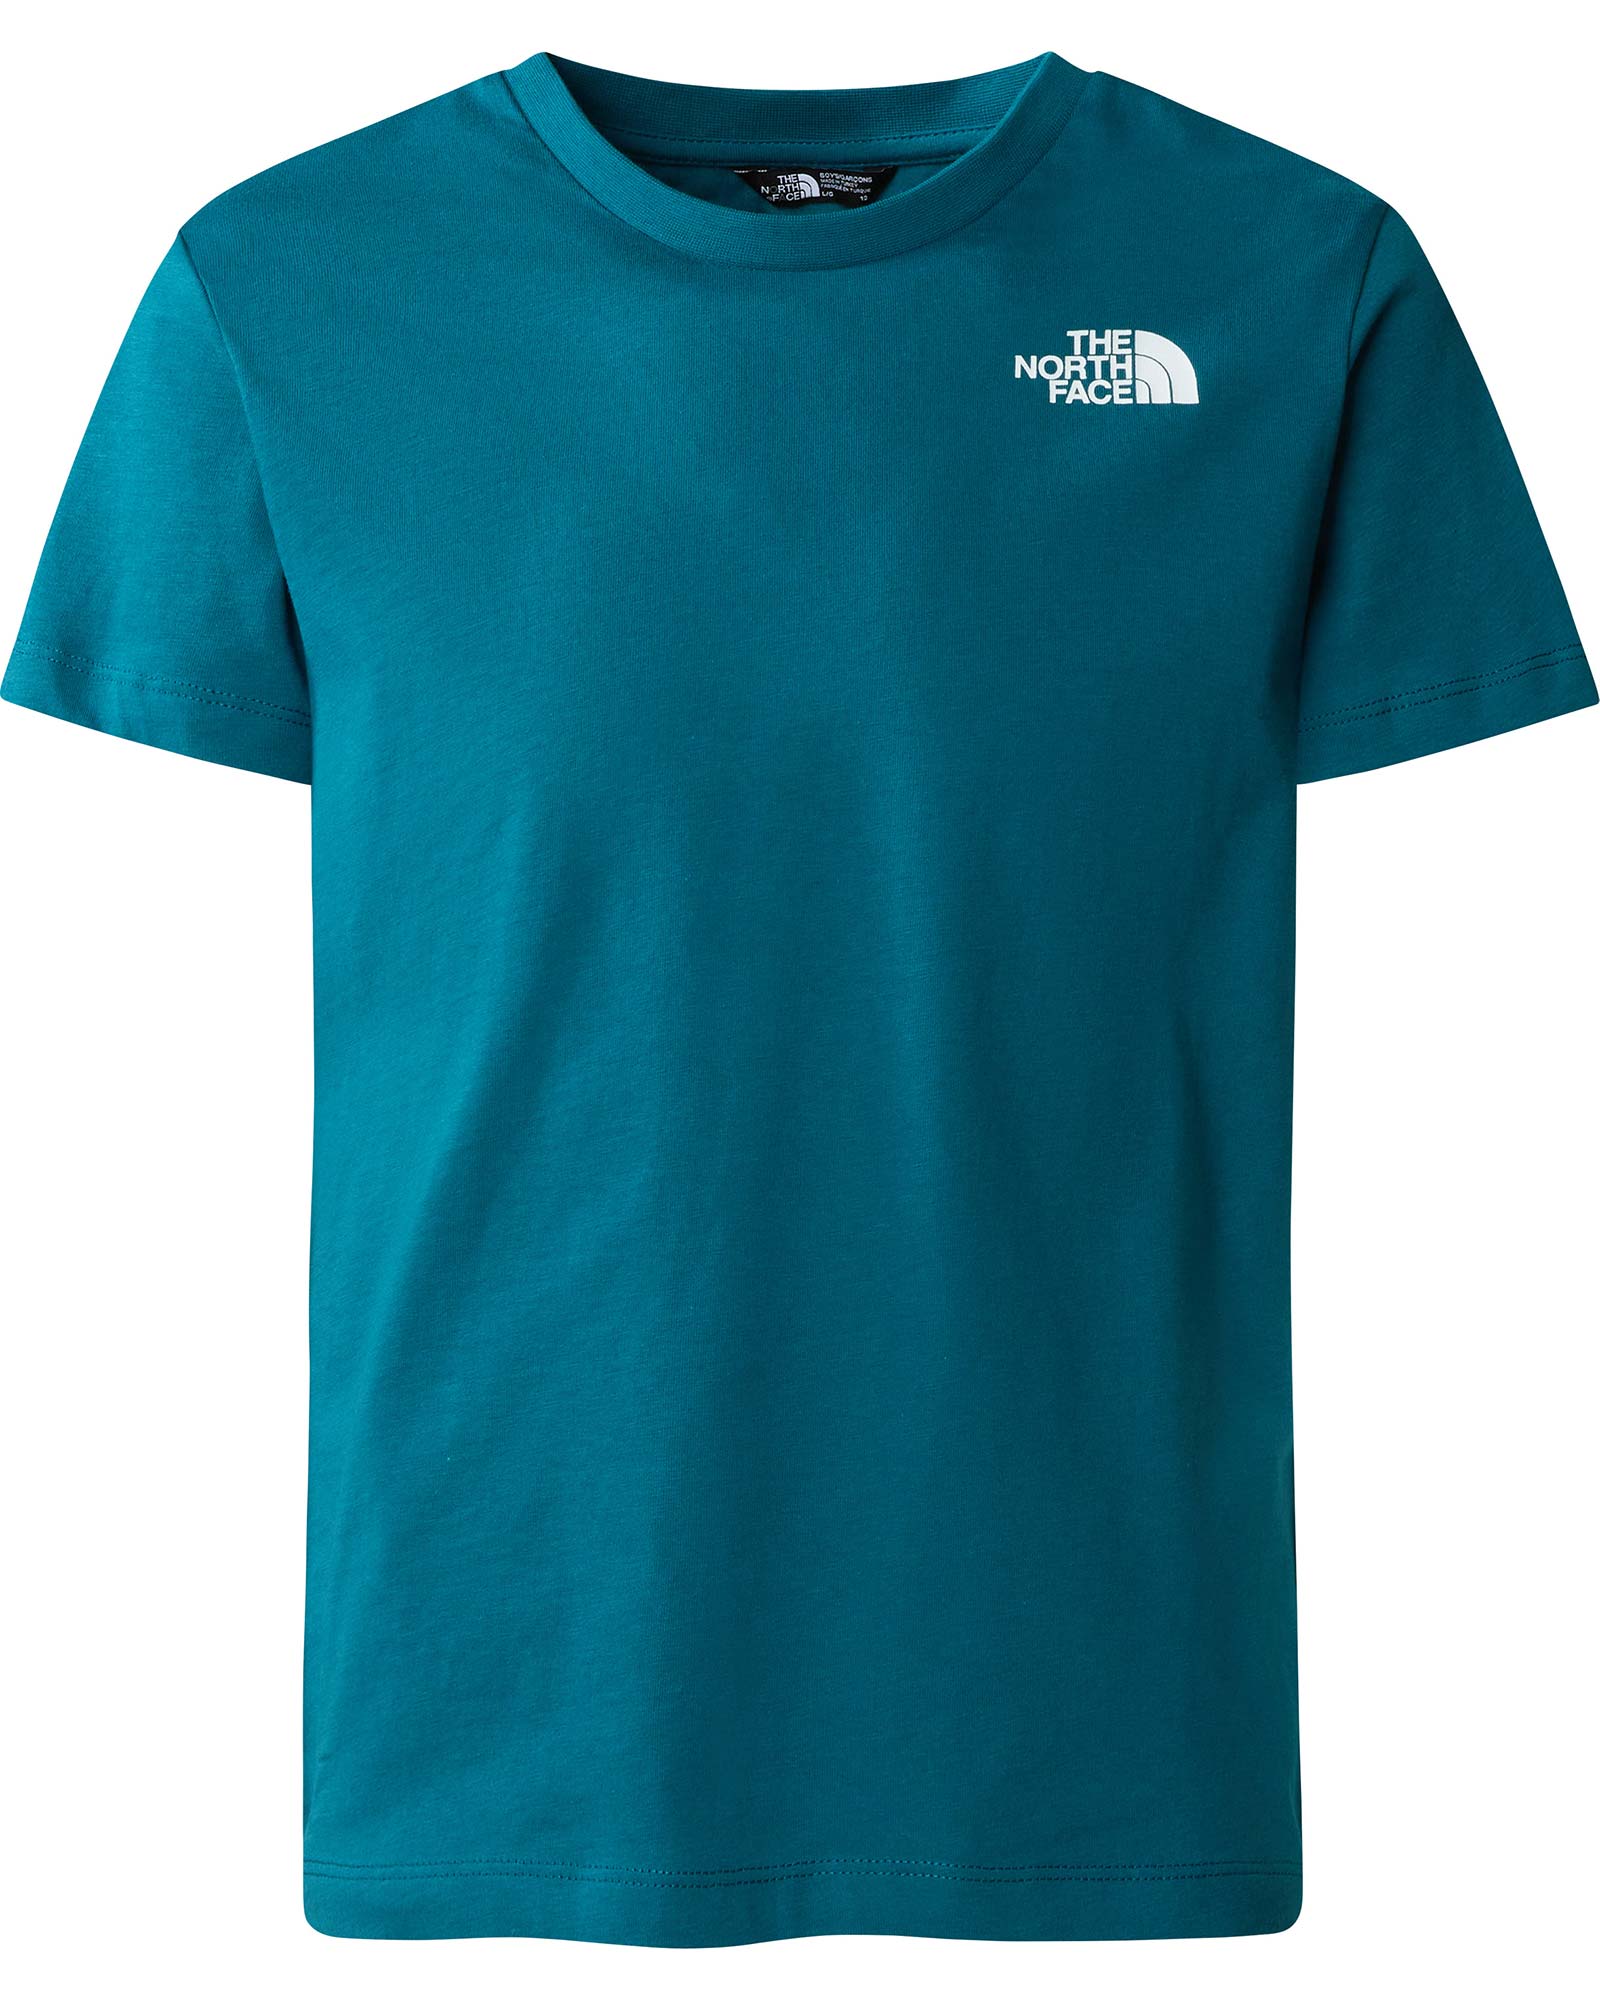 The North Face Boy's Redbox T-Shirt (Back Box Graphic)